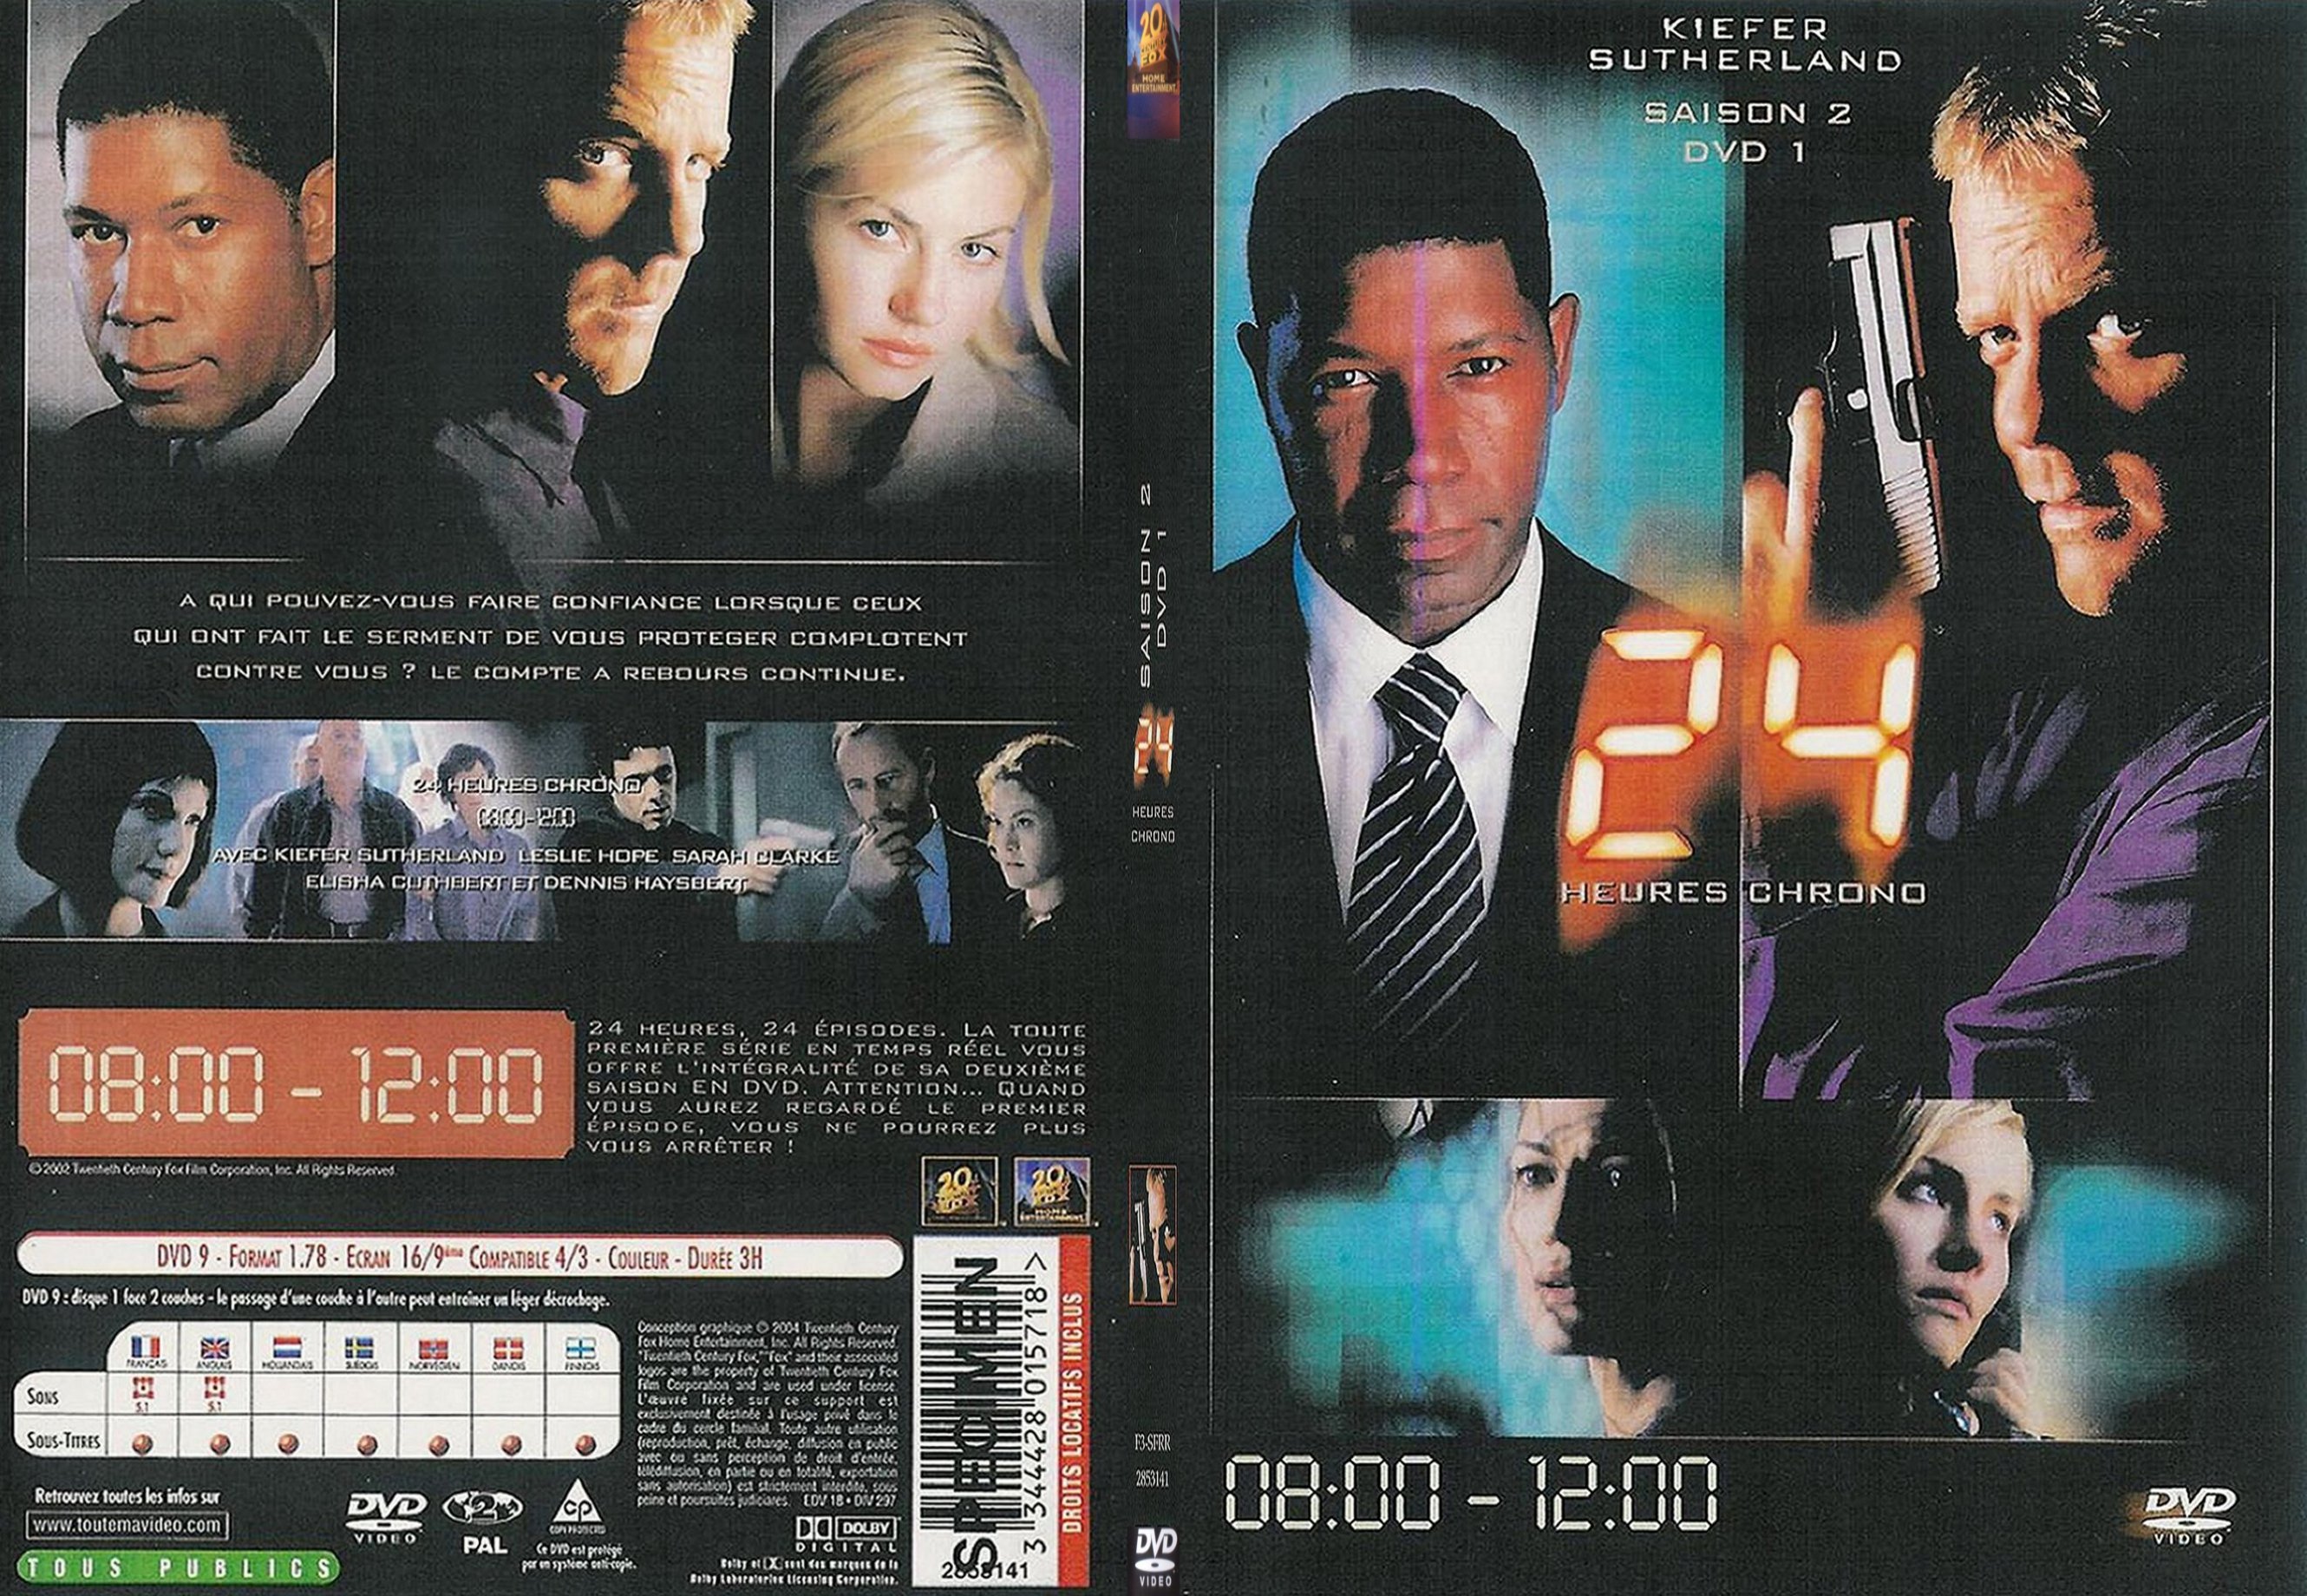 Jaquette DVD 24 heures chrono - Saison 2 dvd 1 - slim